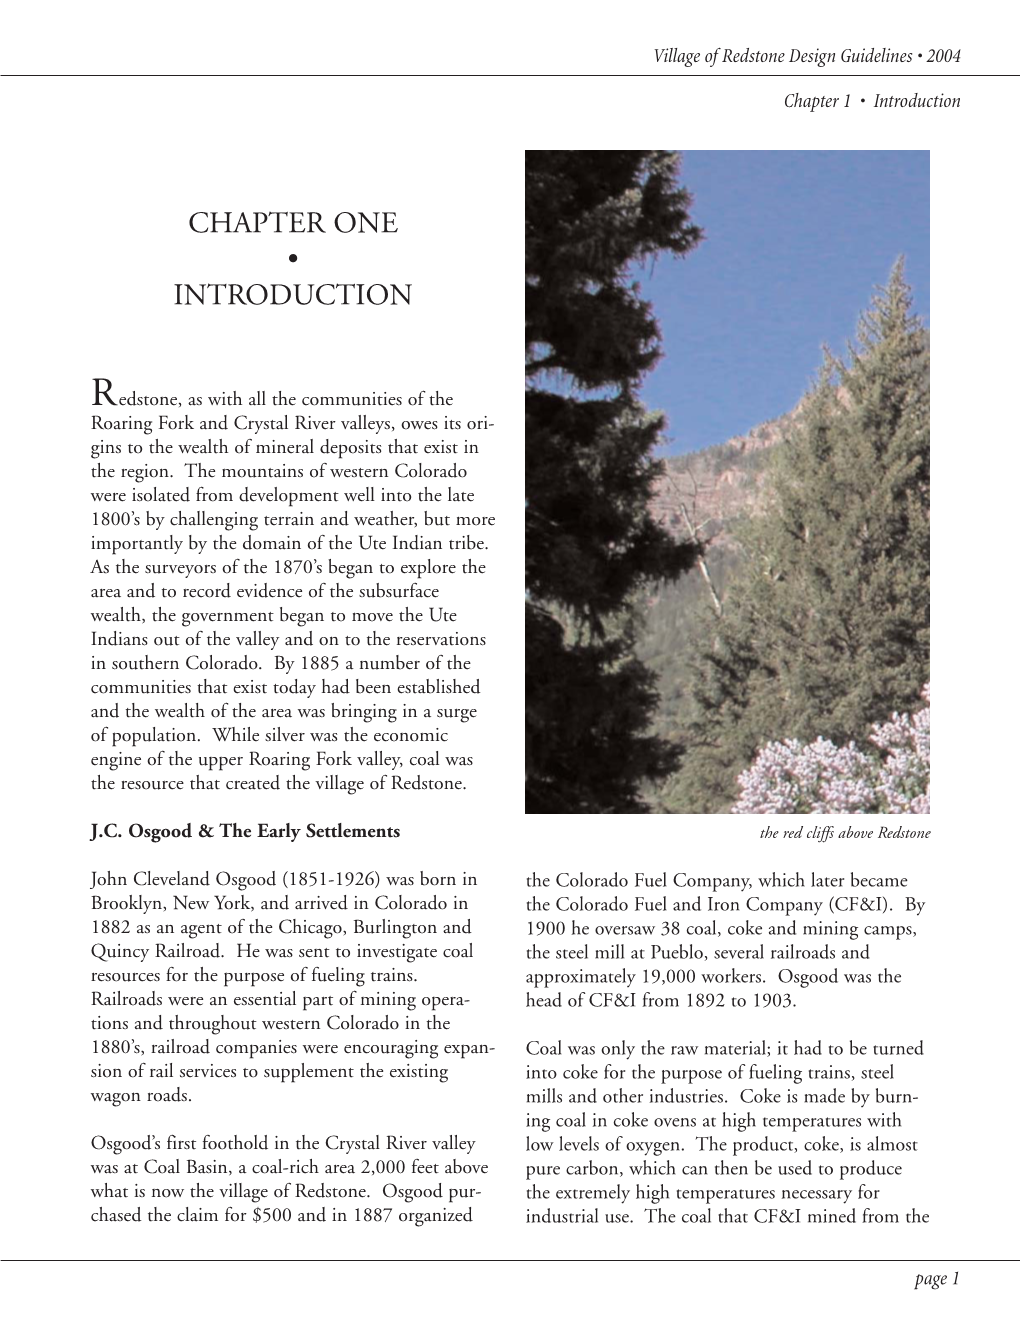 RHPC Chapter 1 (PDF)